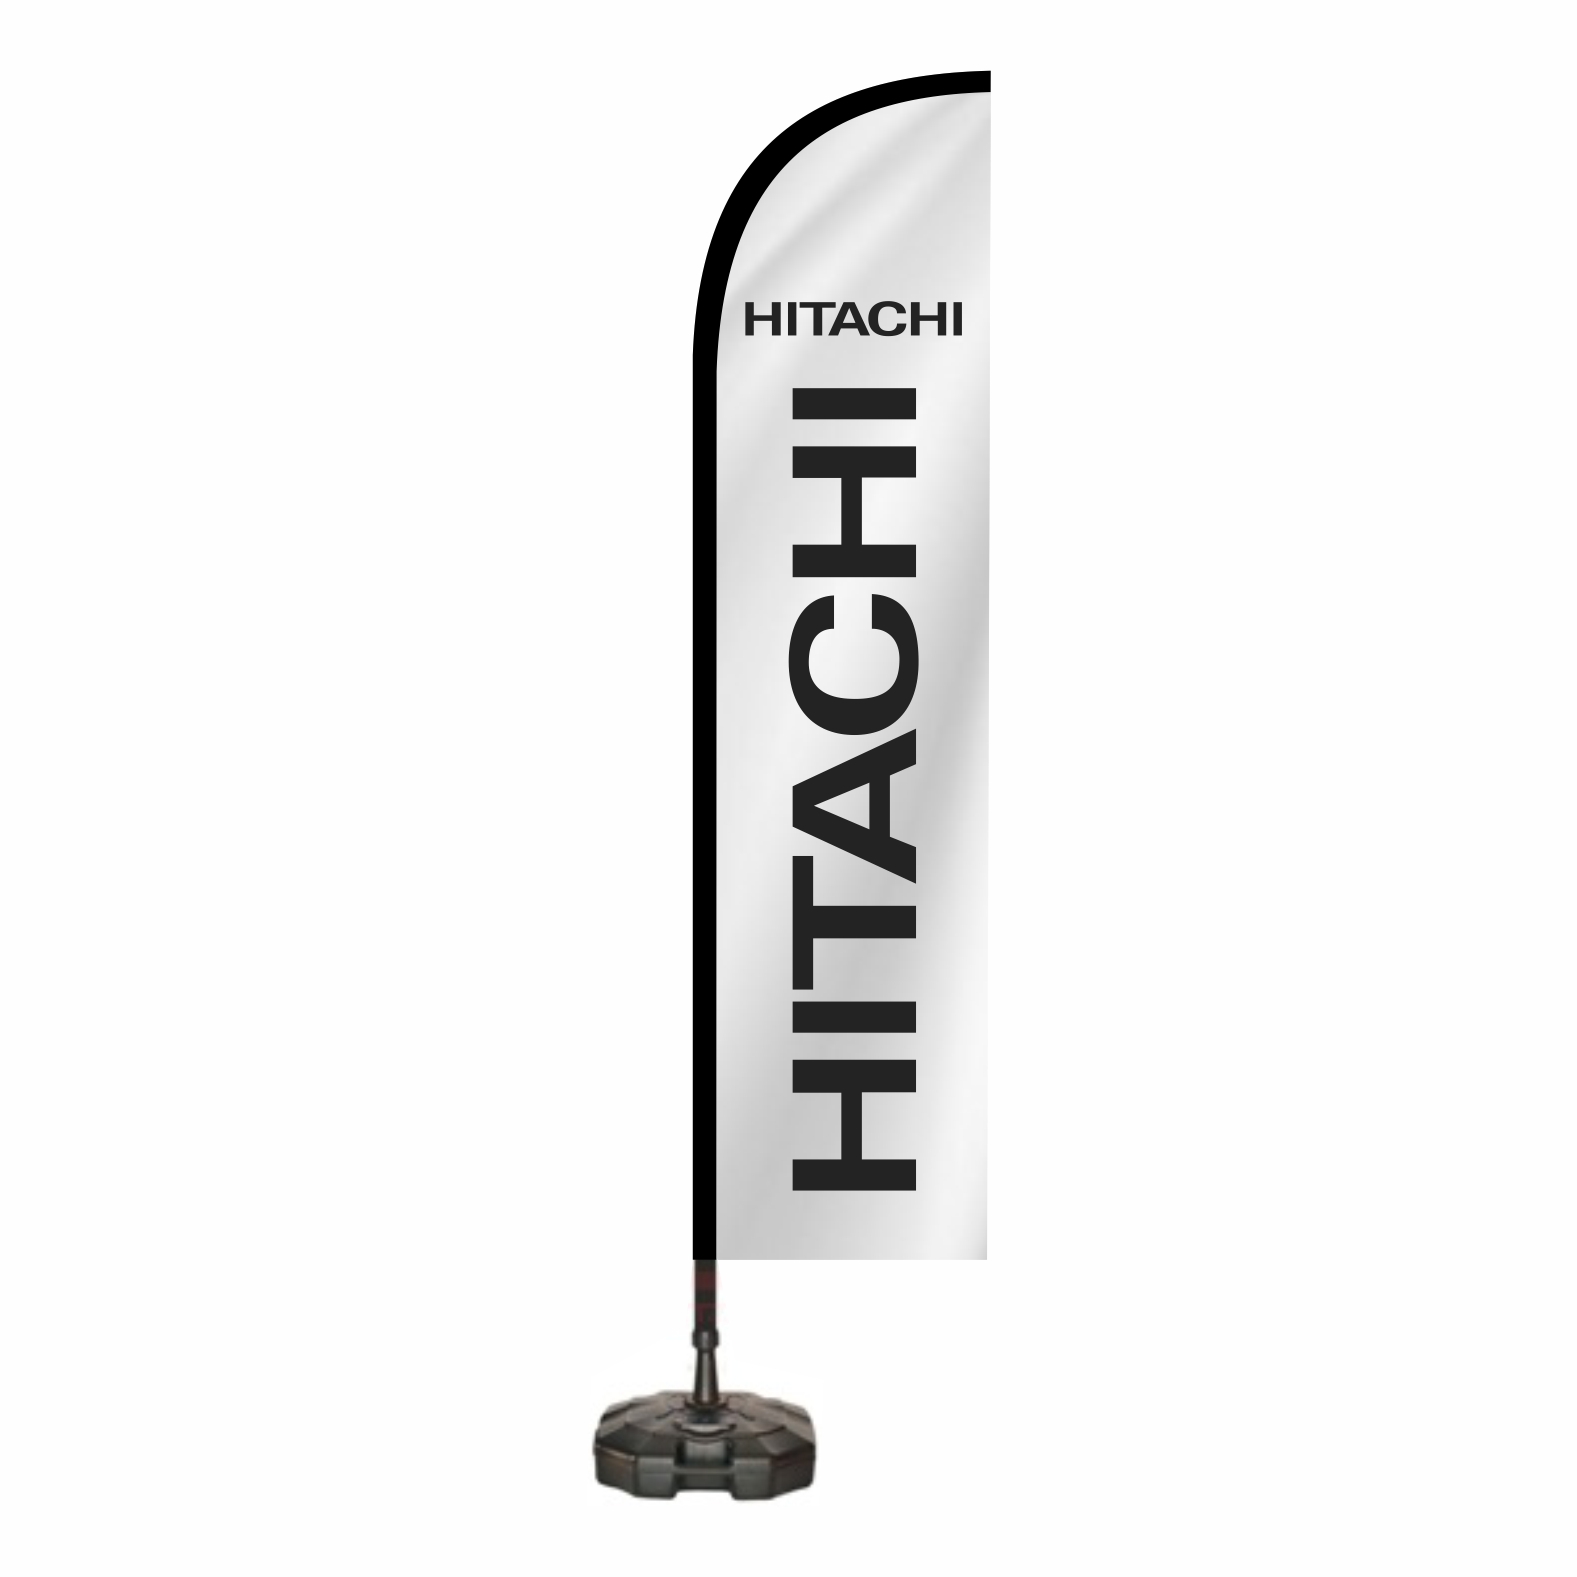 Hitachi Reklam Bayra Nedir